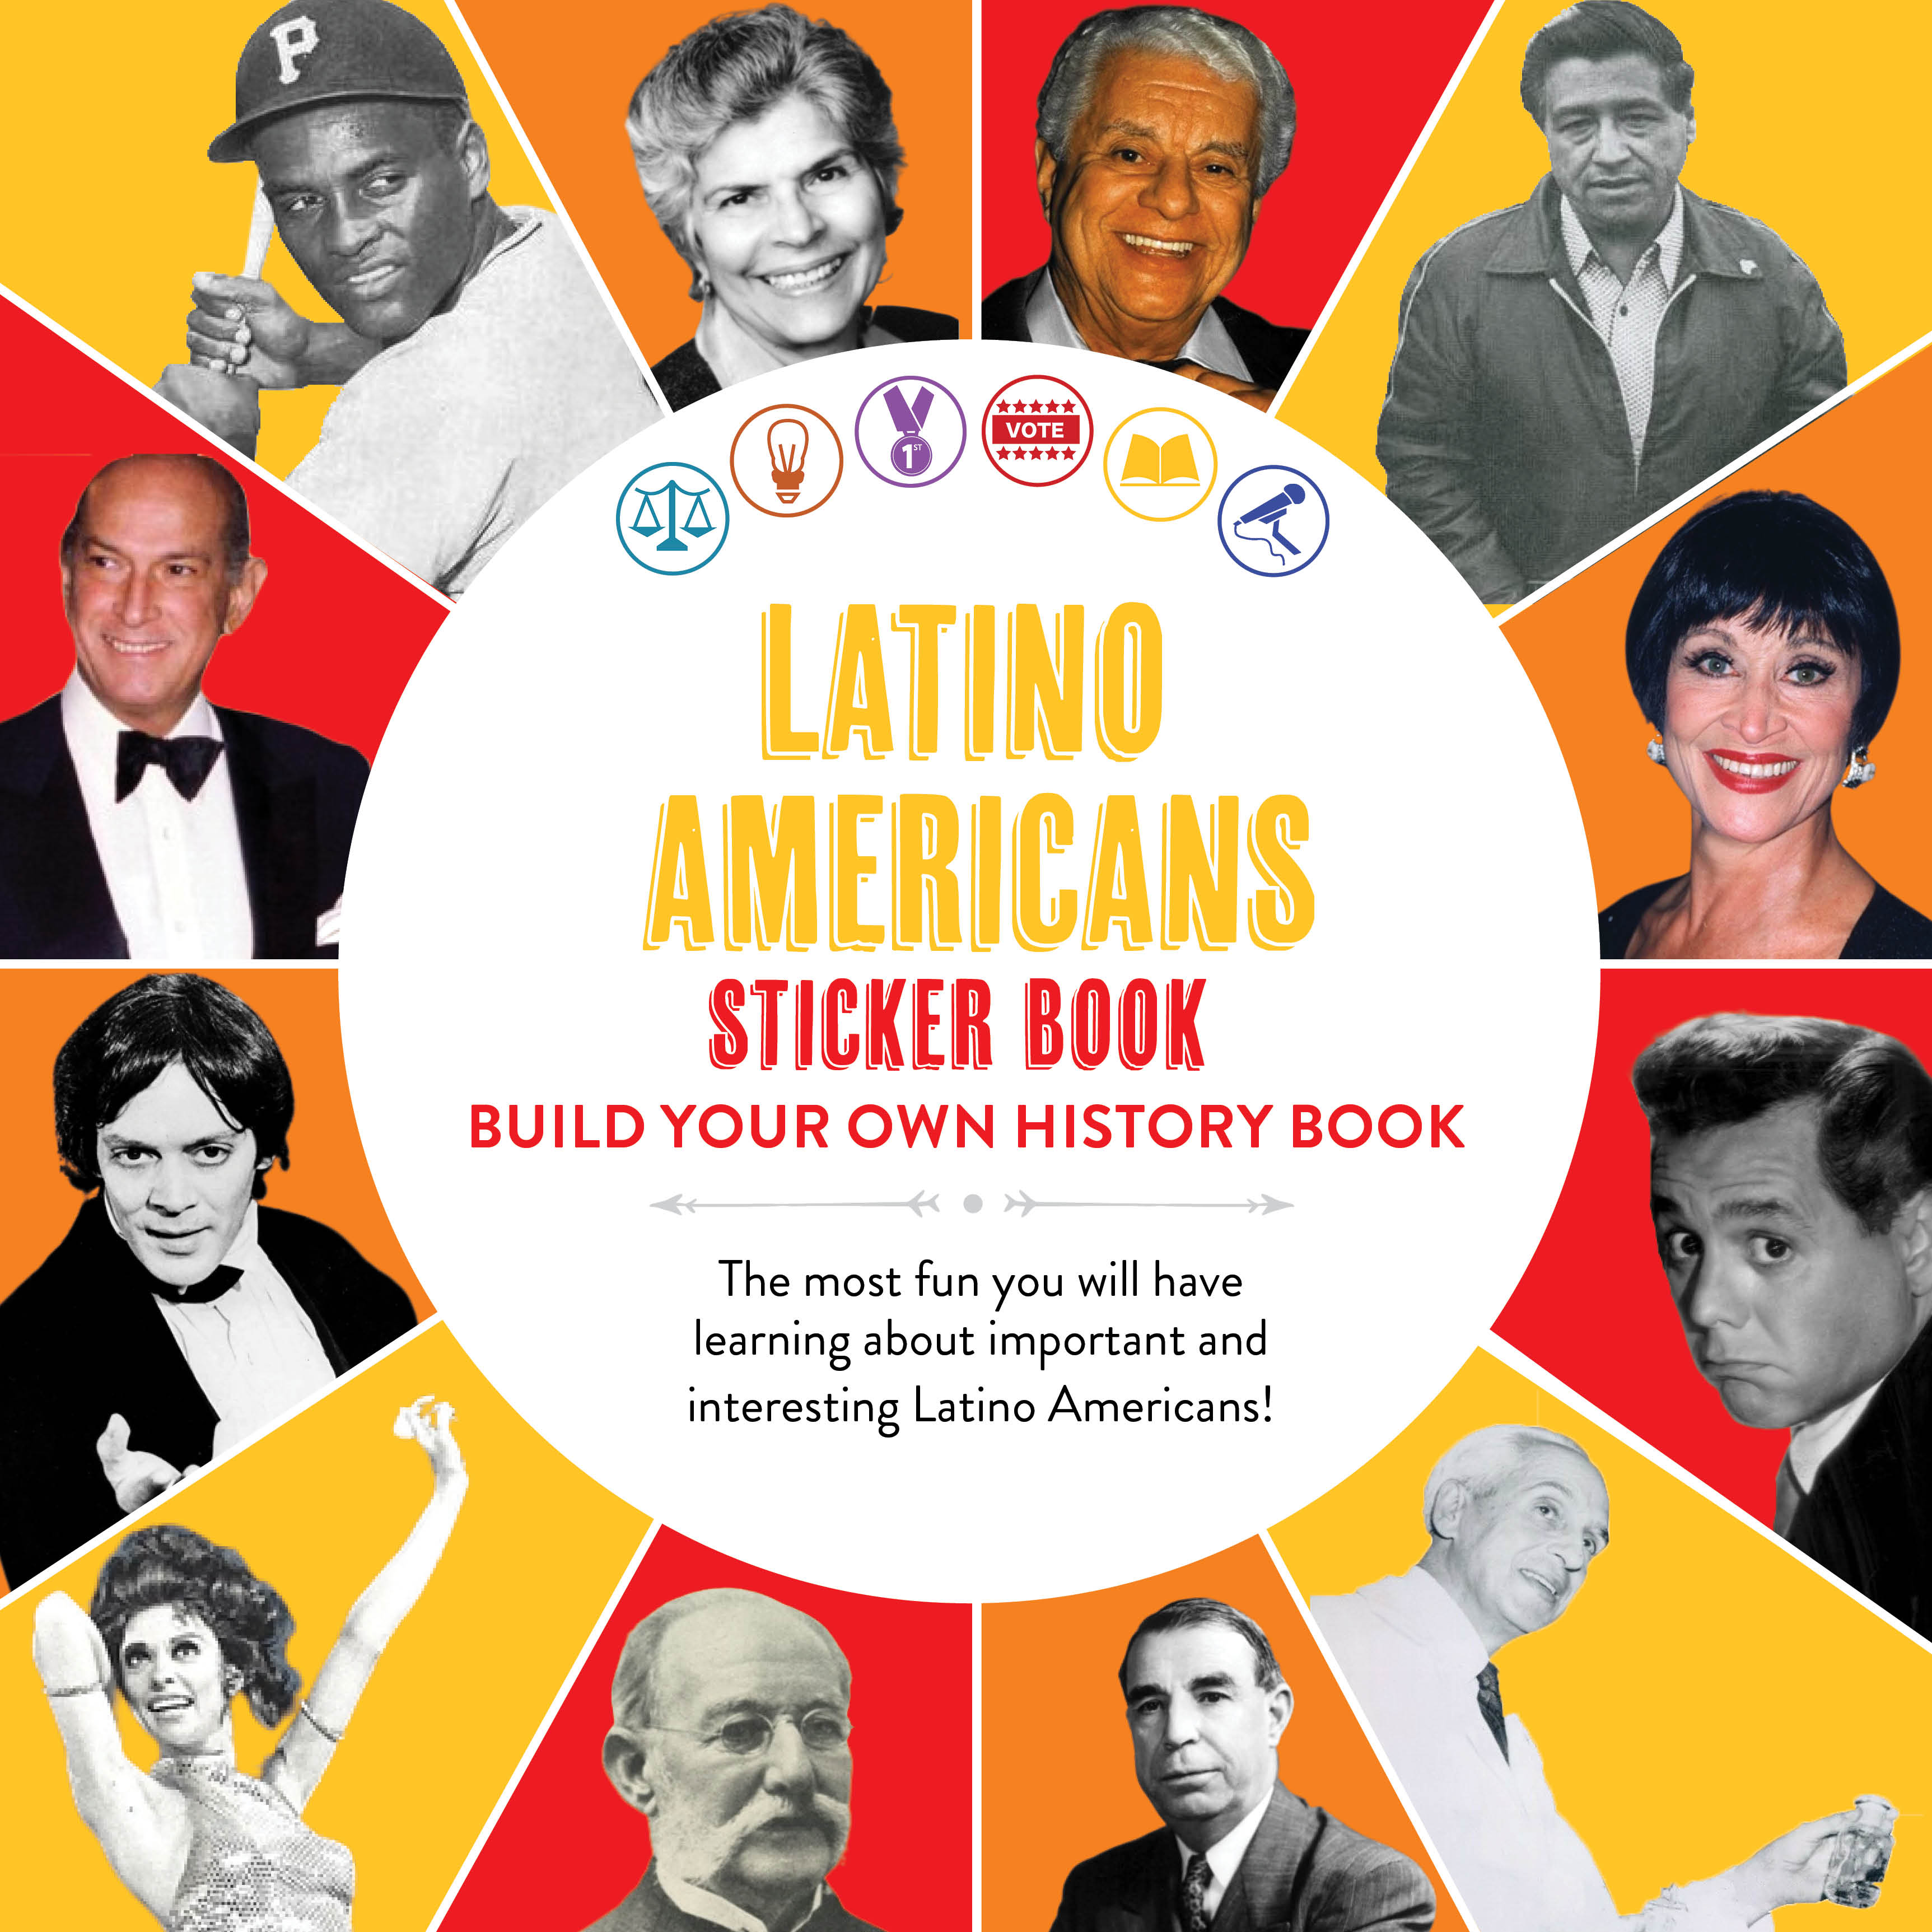 Image for" Latino American Sticker Book"